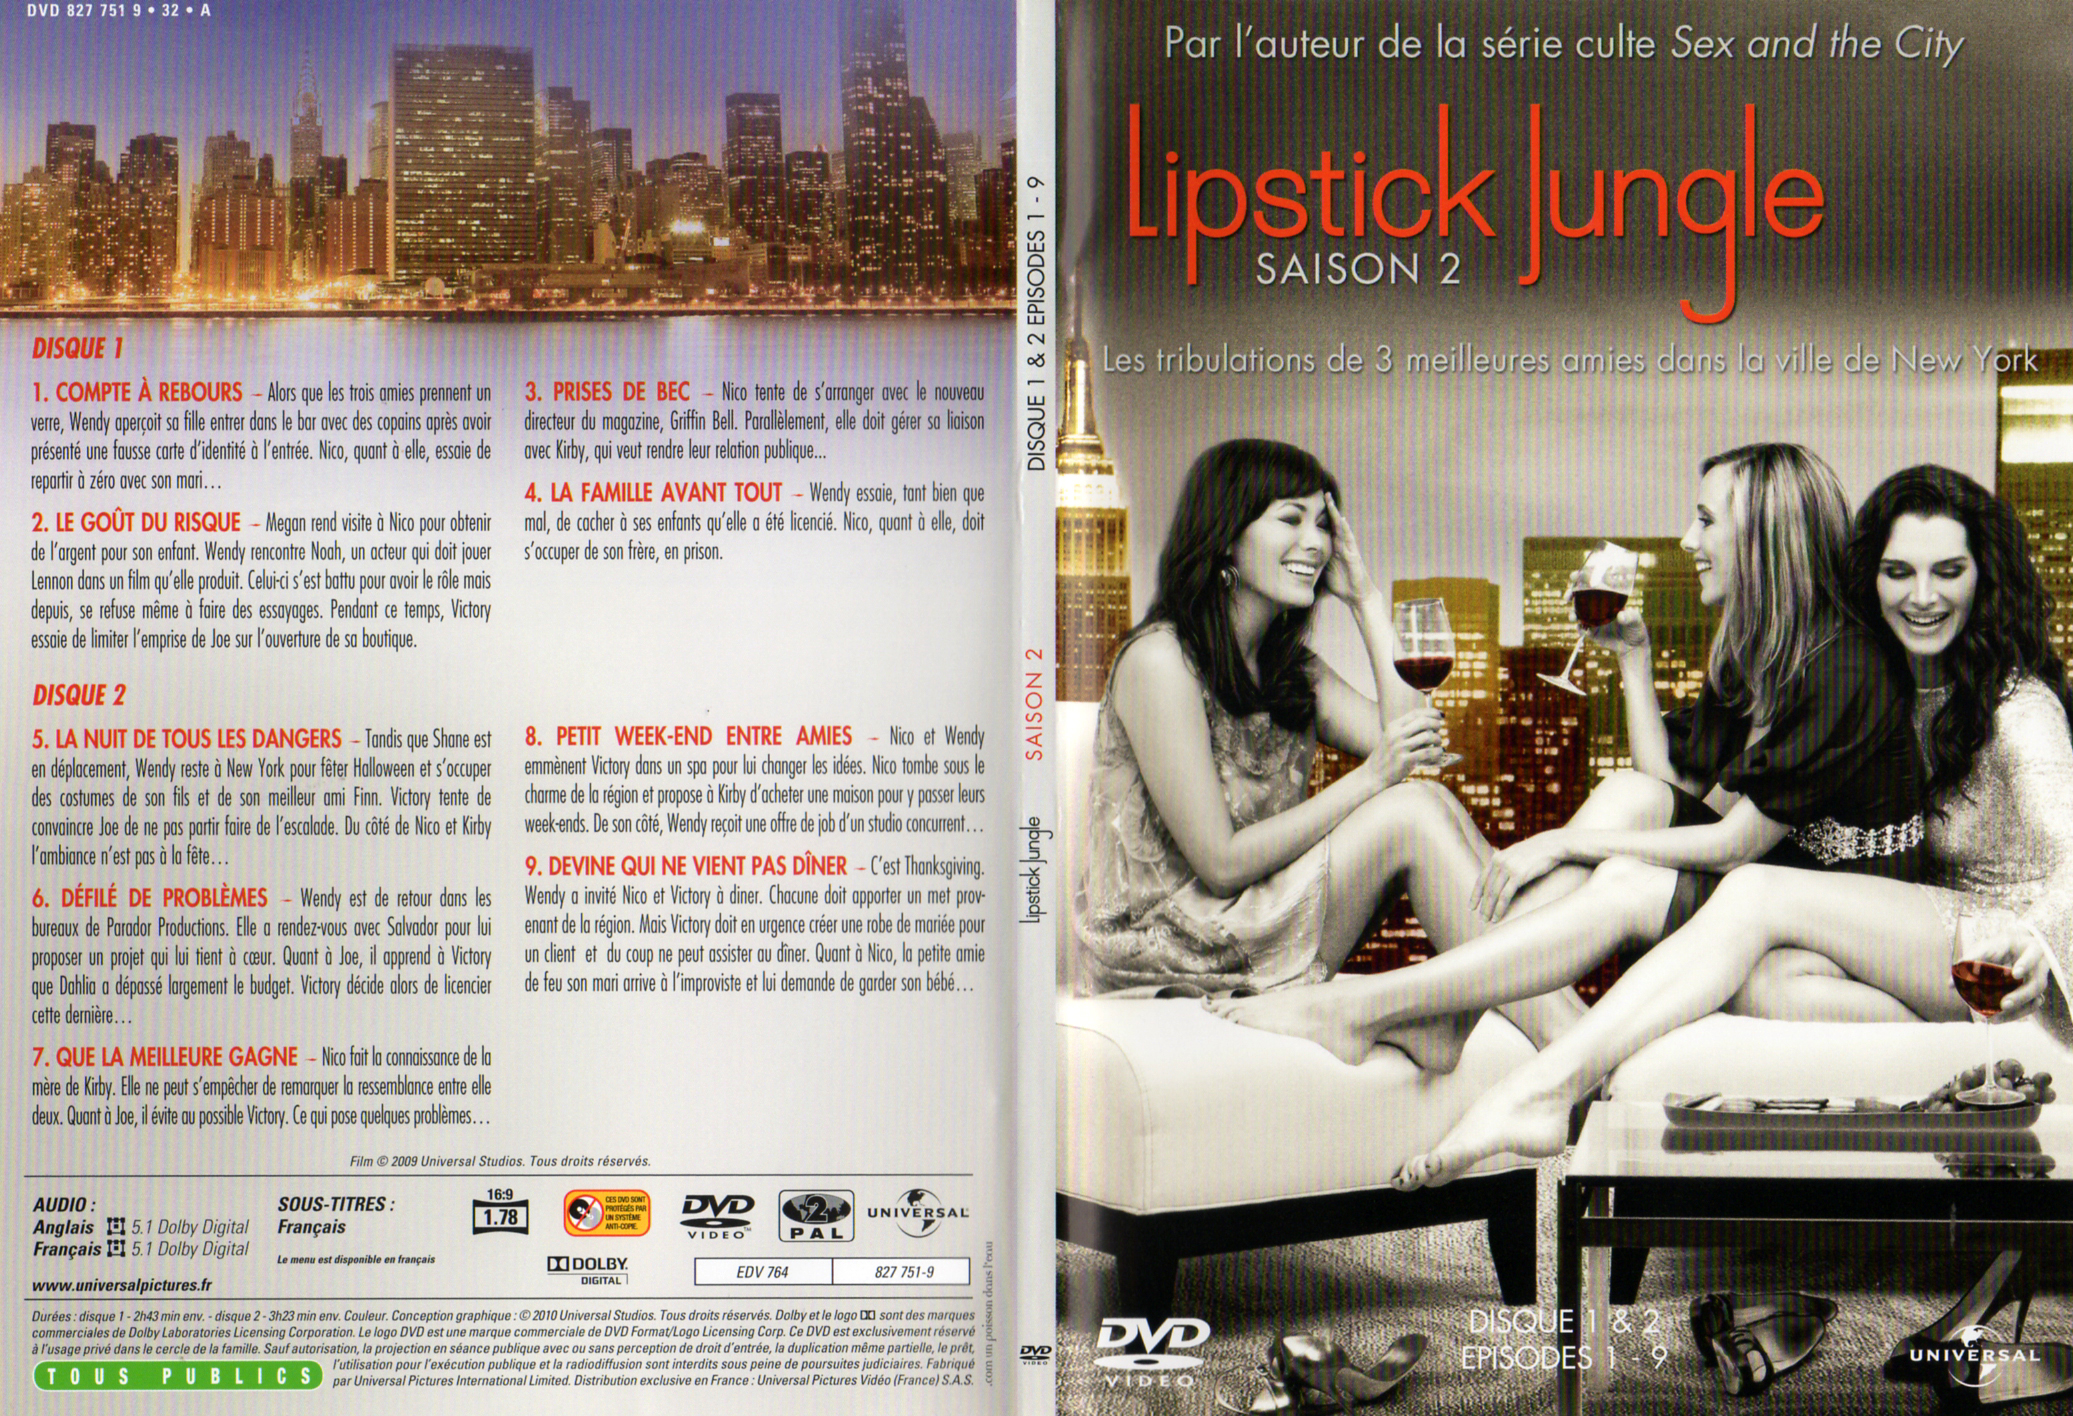 Jaquette DVD Lipstick jungle Saison 2 DVD 1